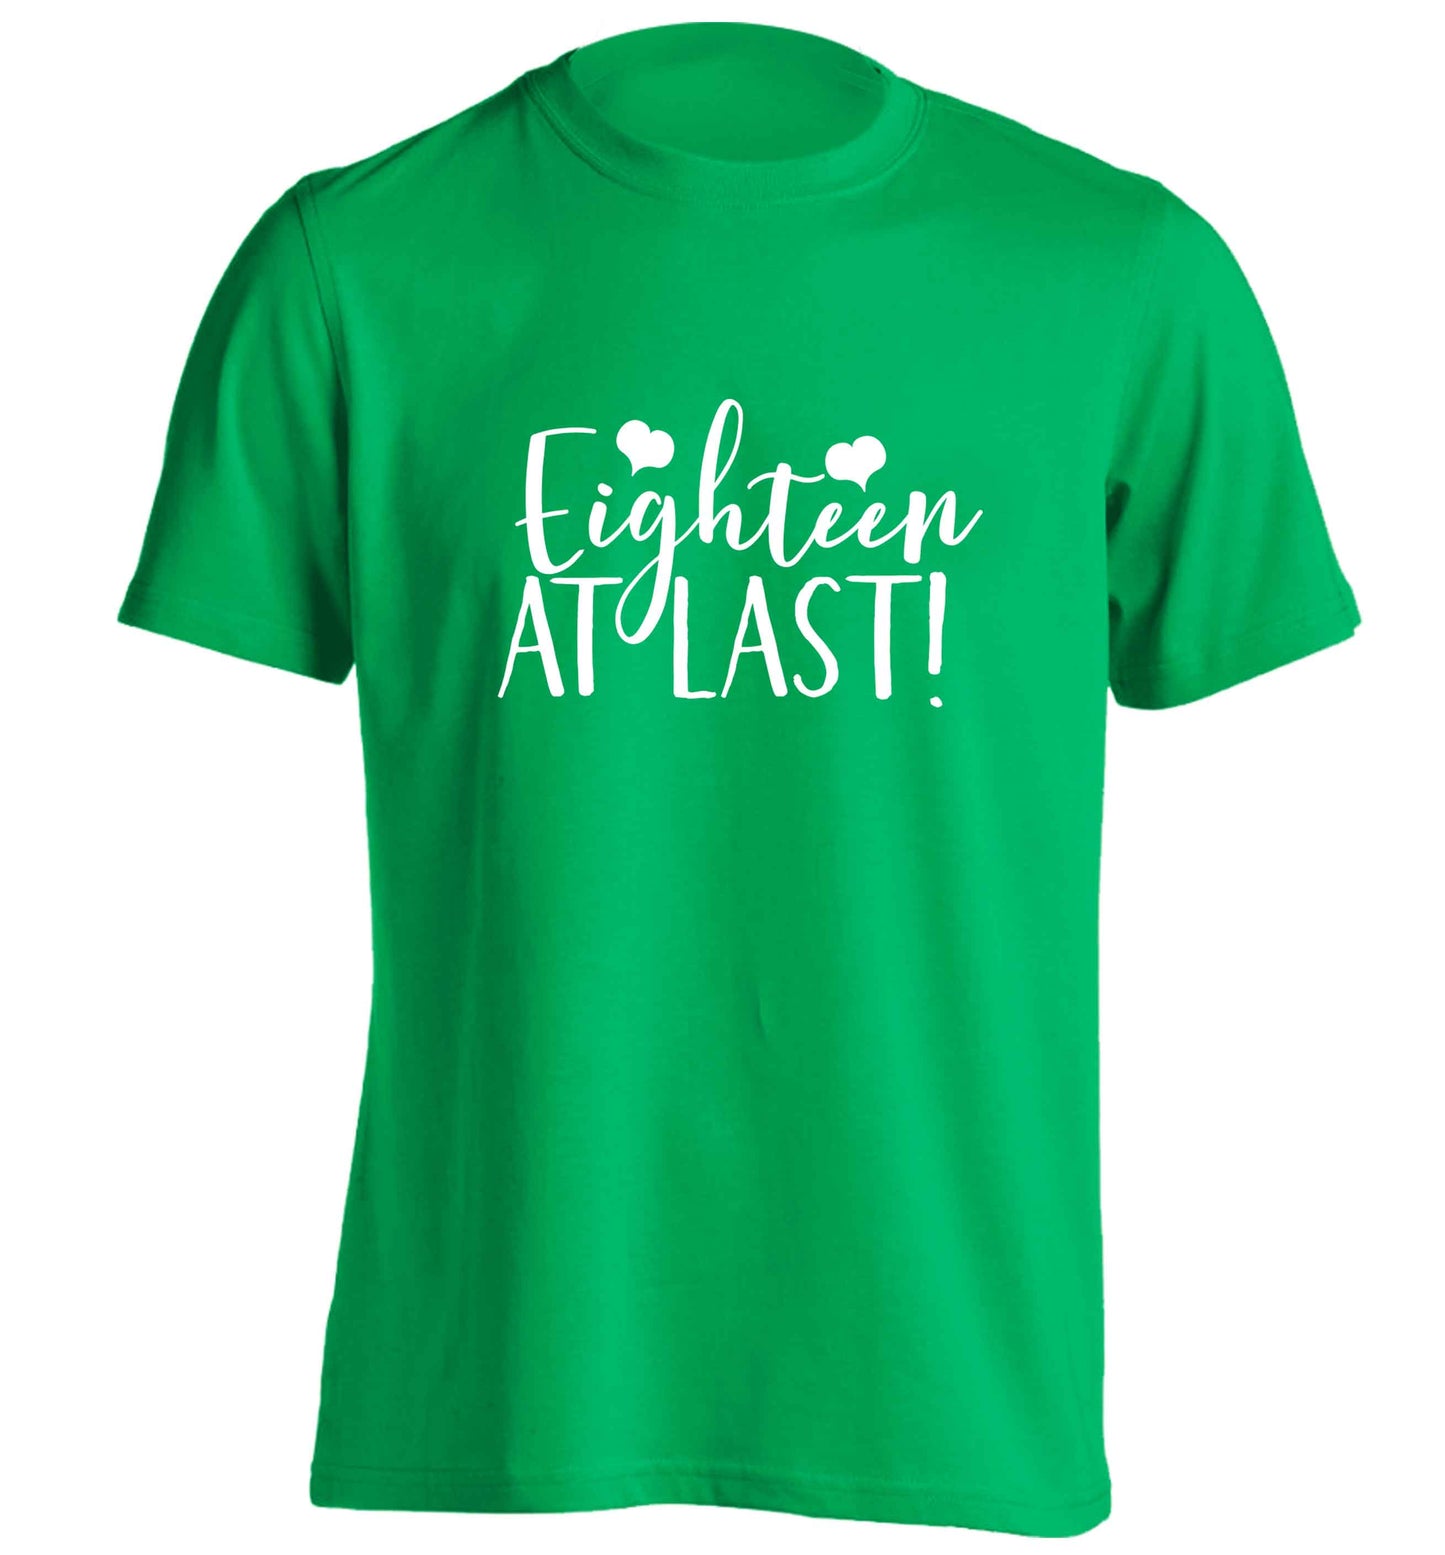 Eighteen at last!adults unisex green Tshirt 2XL